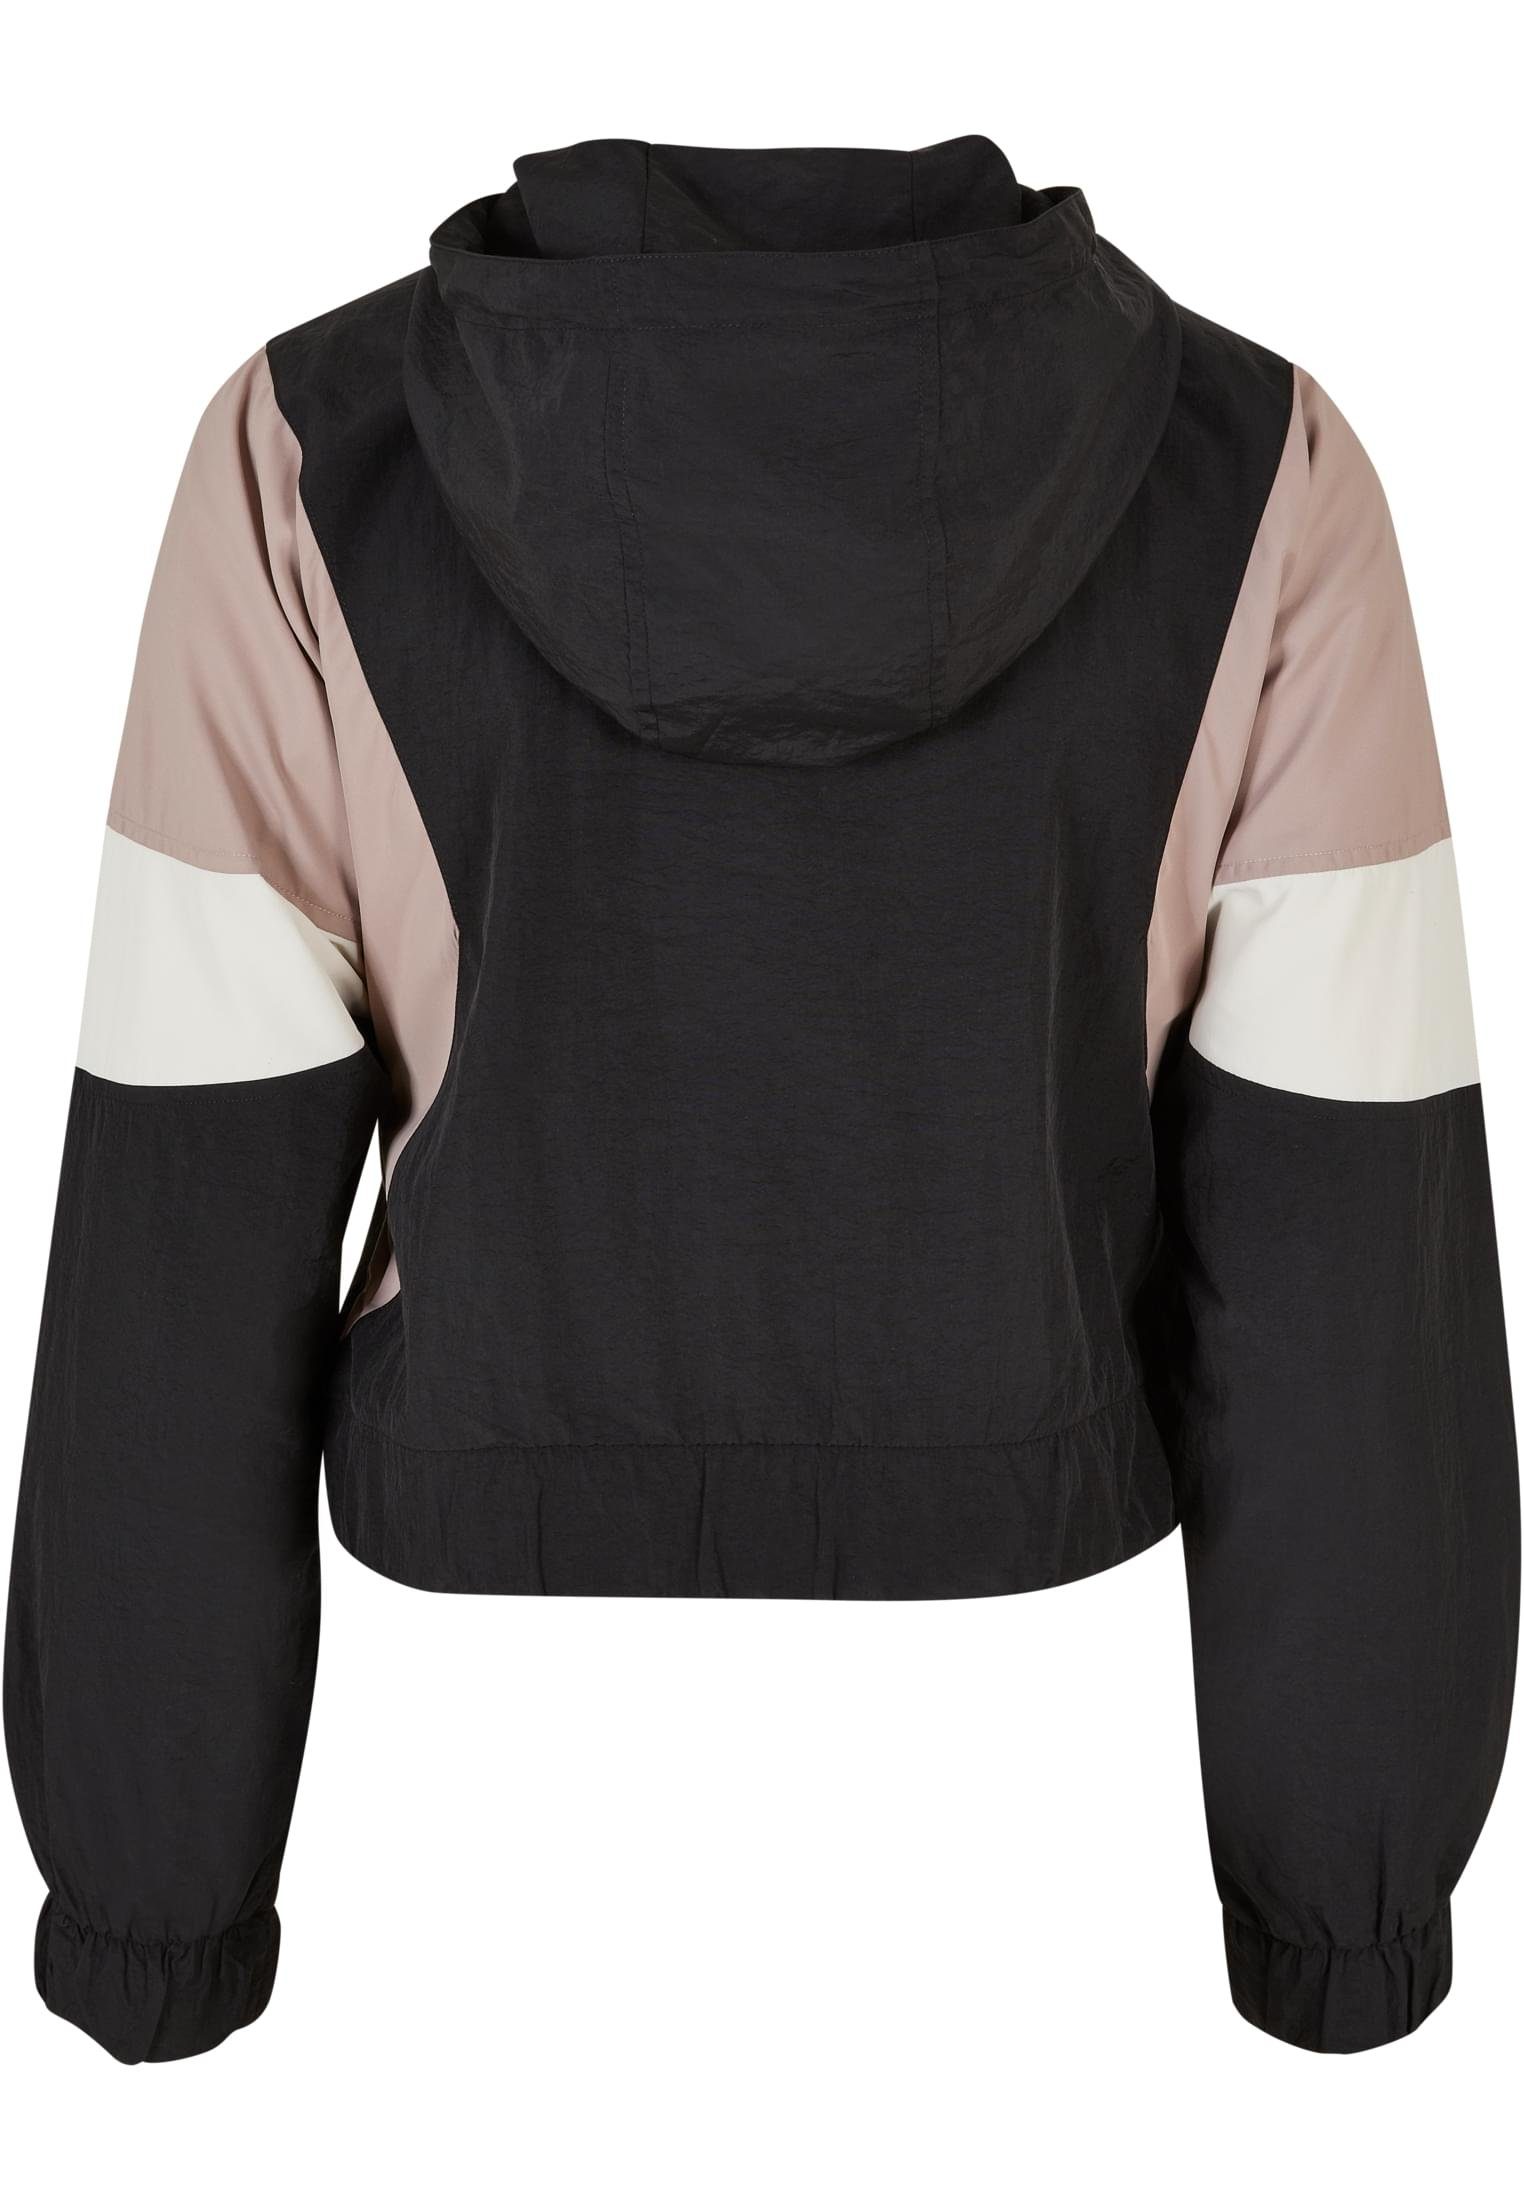 Damen CLASSICS (1-St) URBAN black/duskrose/whitesand Ladies Short Outdoorjacke 3-Tone Jacket Crinkle